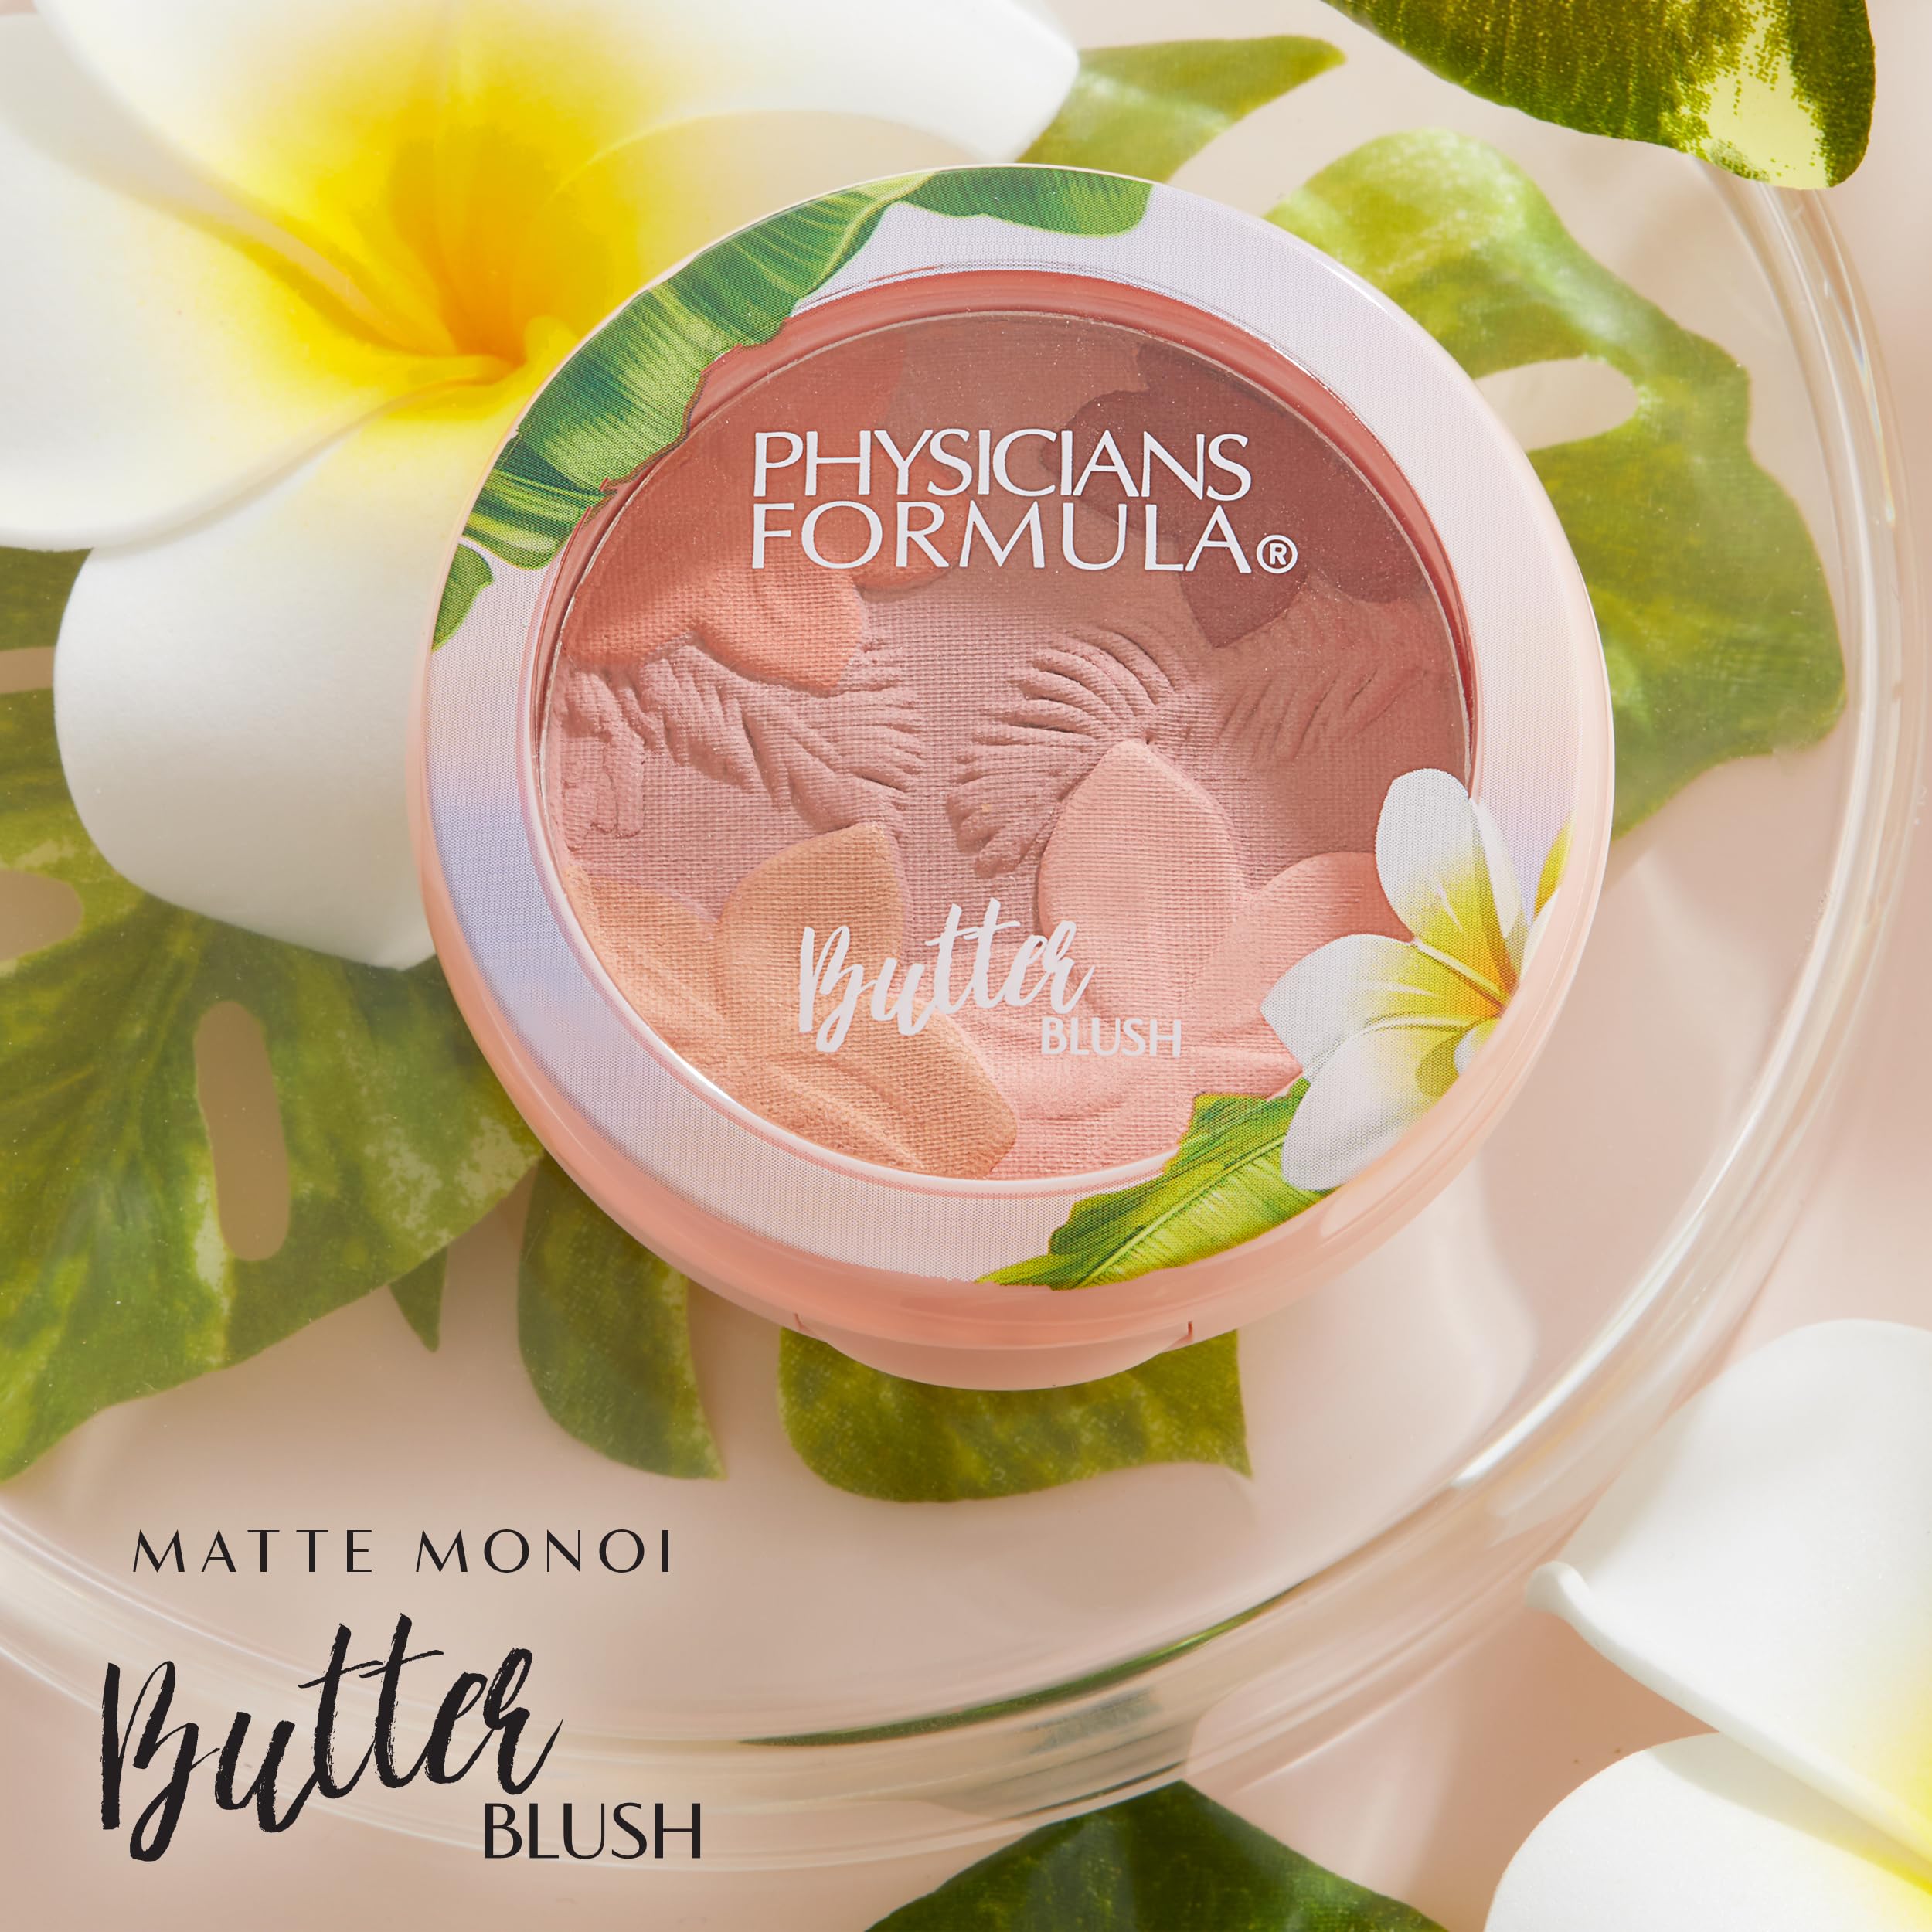 Physicians Formula Matte Monoi Butter Blush Makeup Powder, Mauvy Mattes, Dermatologist Tested